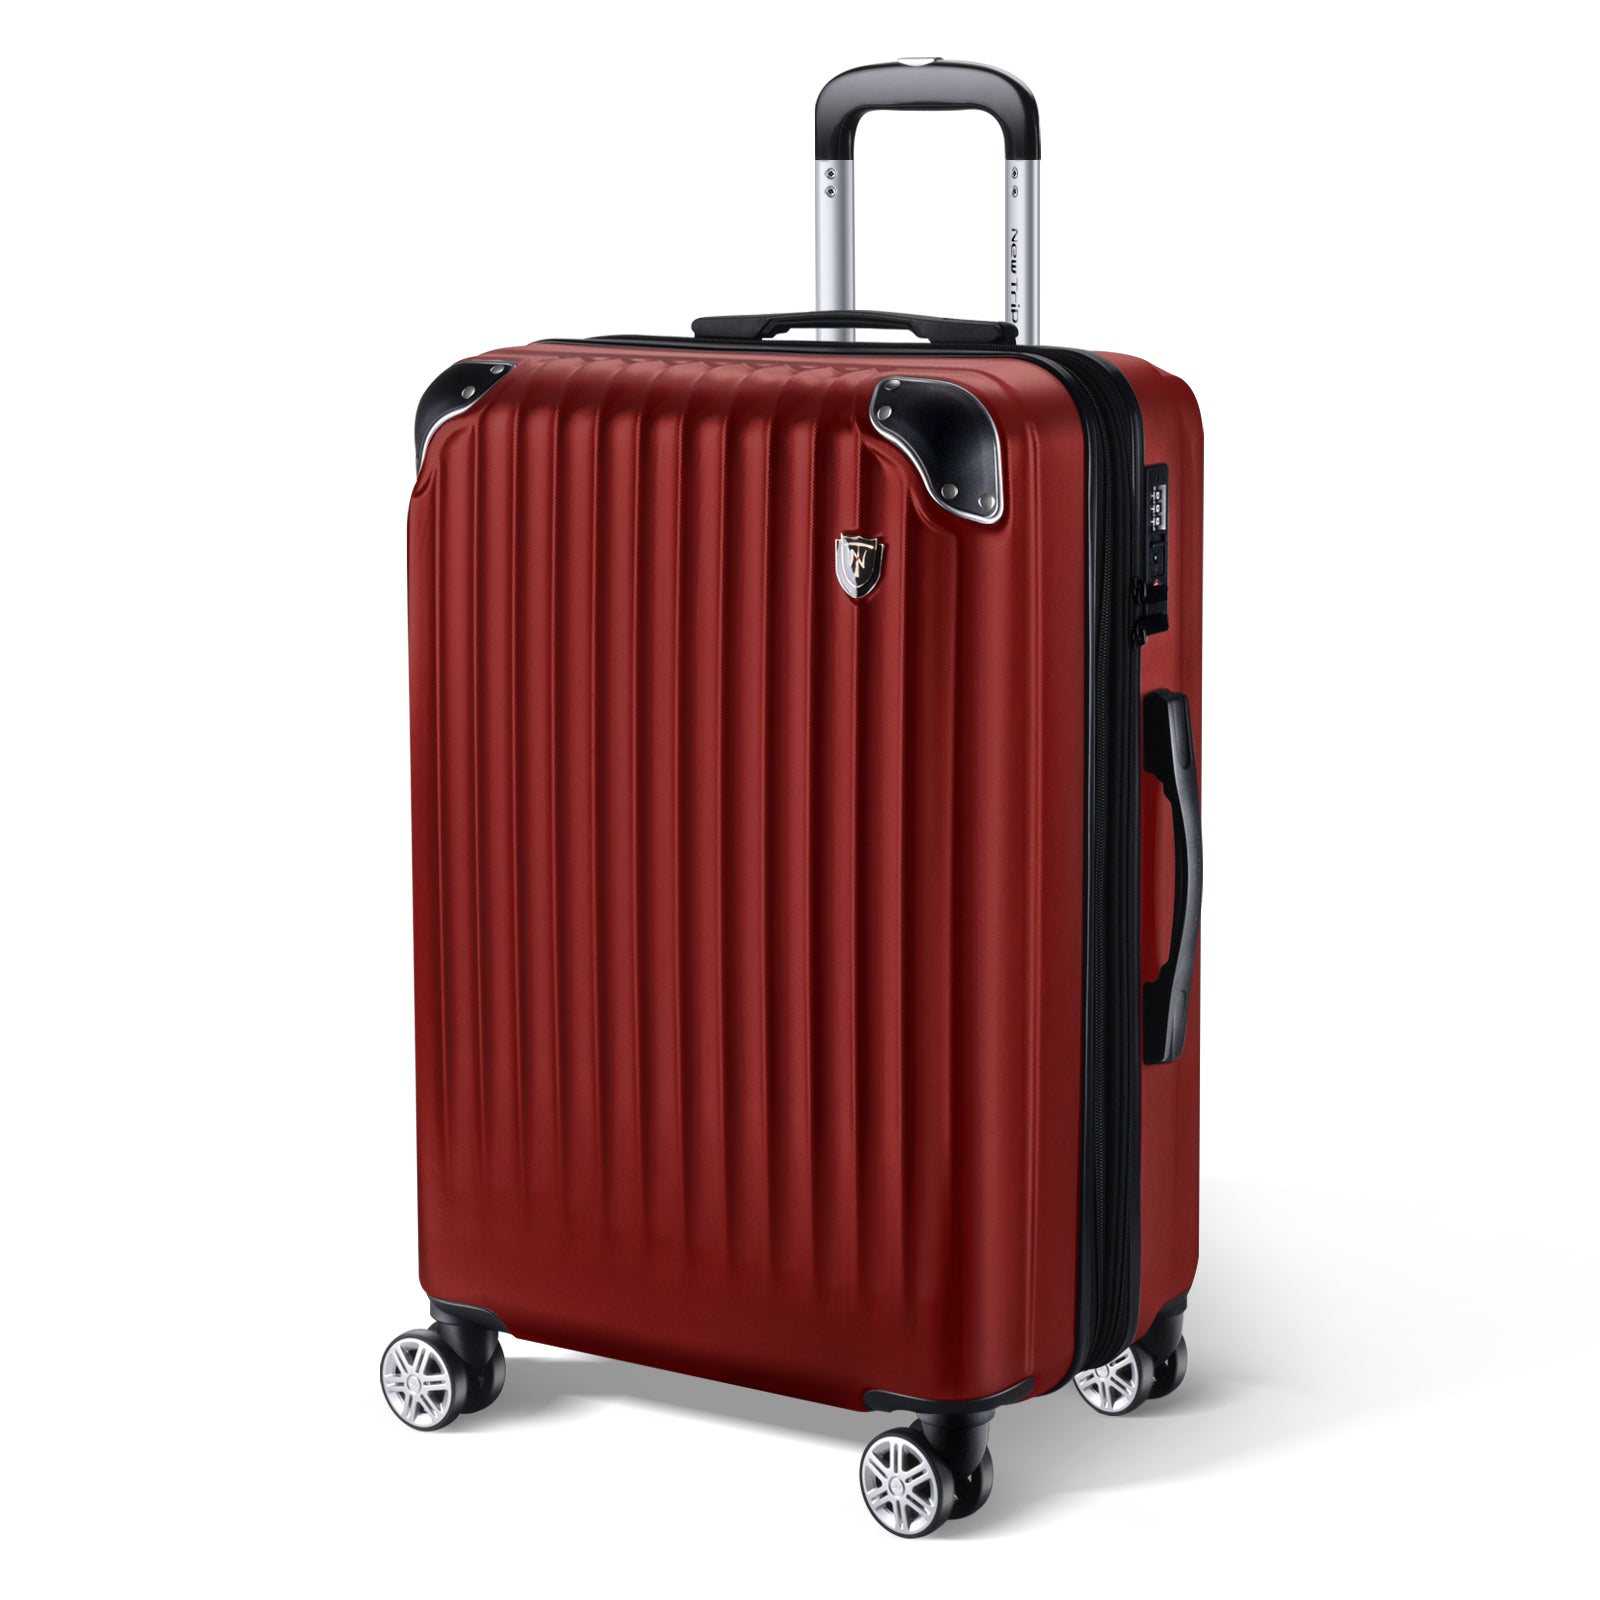 New Tripスーツケース 公式オンラインショップ